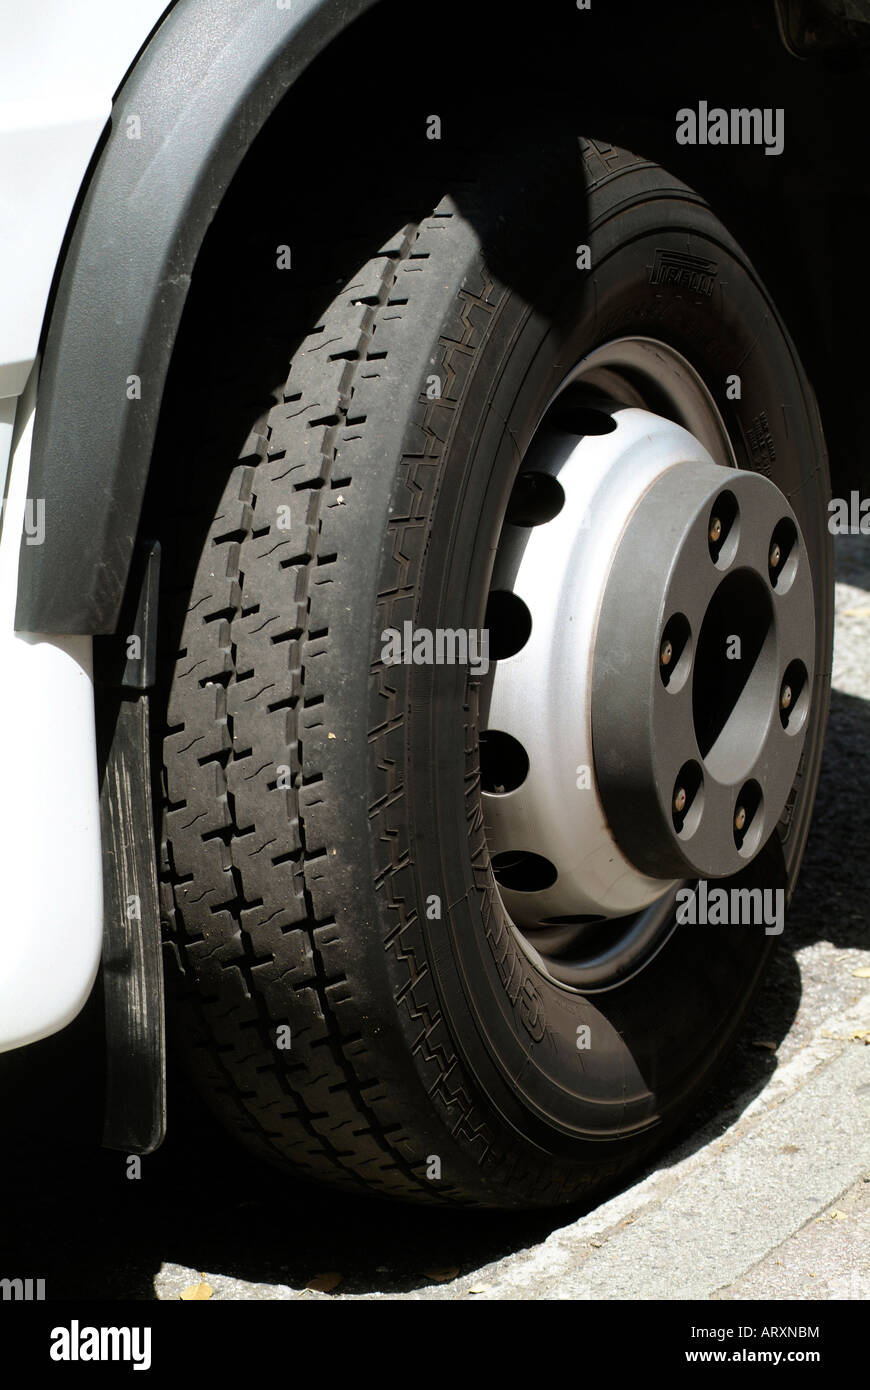 Reifen Reifen treten Tiefe Griff legal illegal Rillen Muster van Autorades hub Stockfoto